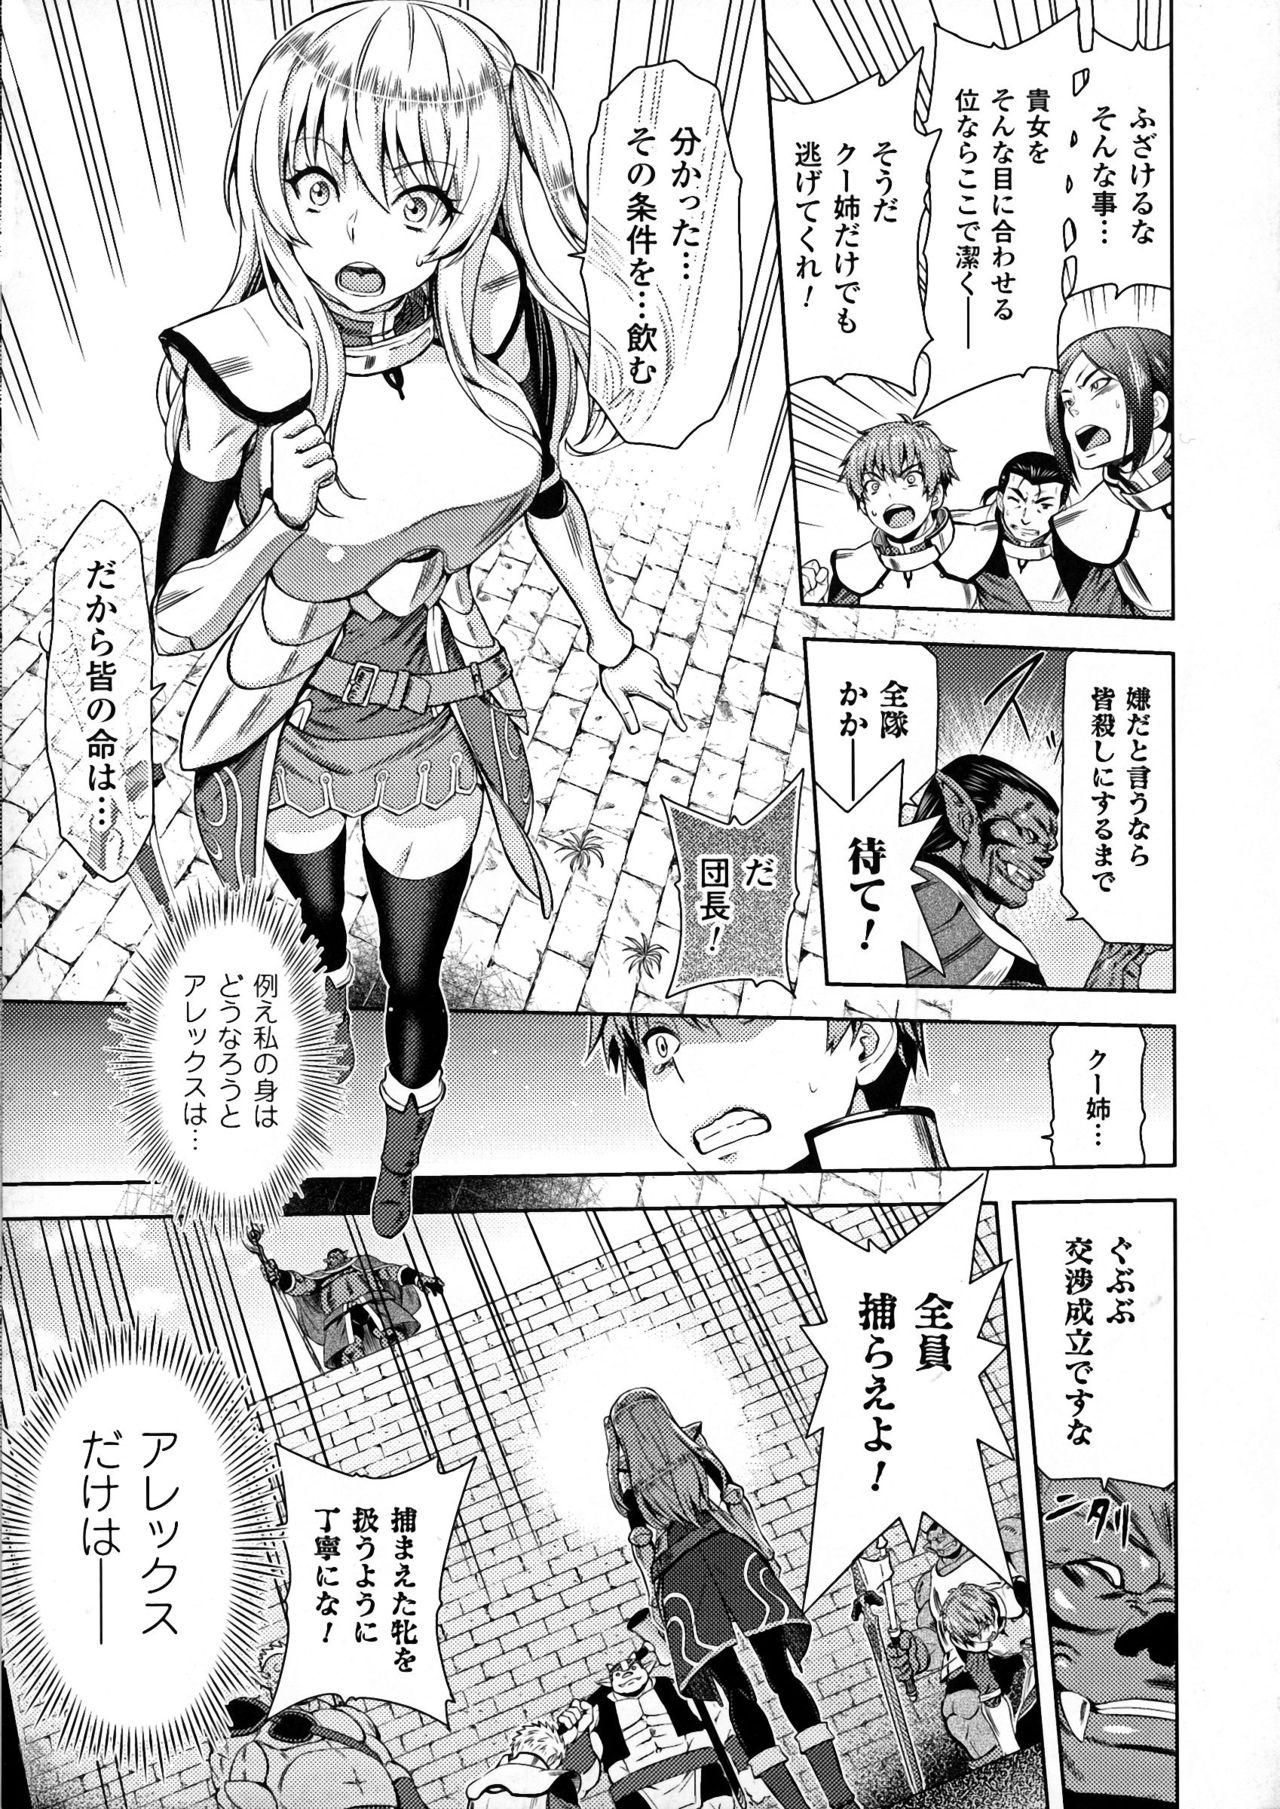 Seigi no Heroine Kangoku File DX Vol. 7 12